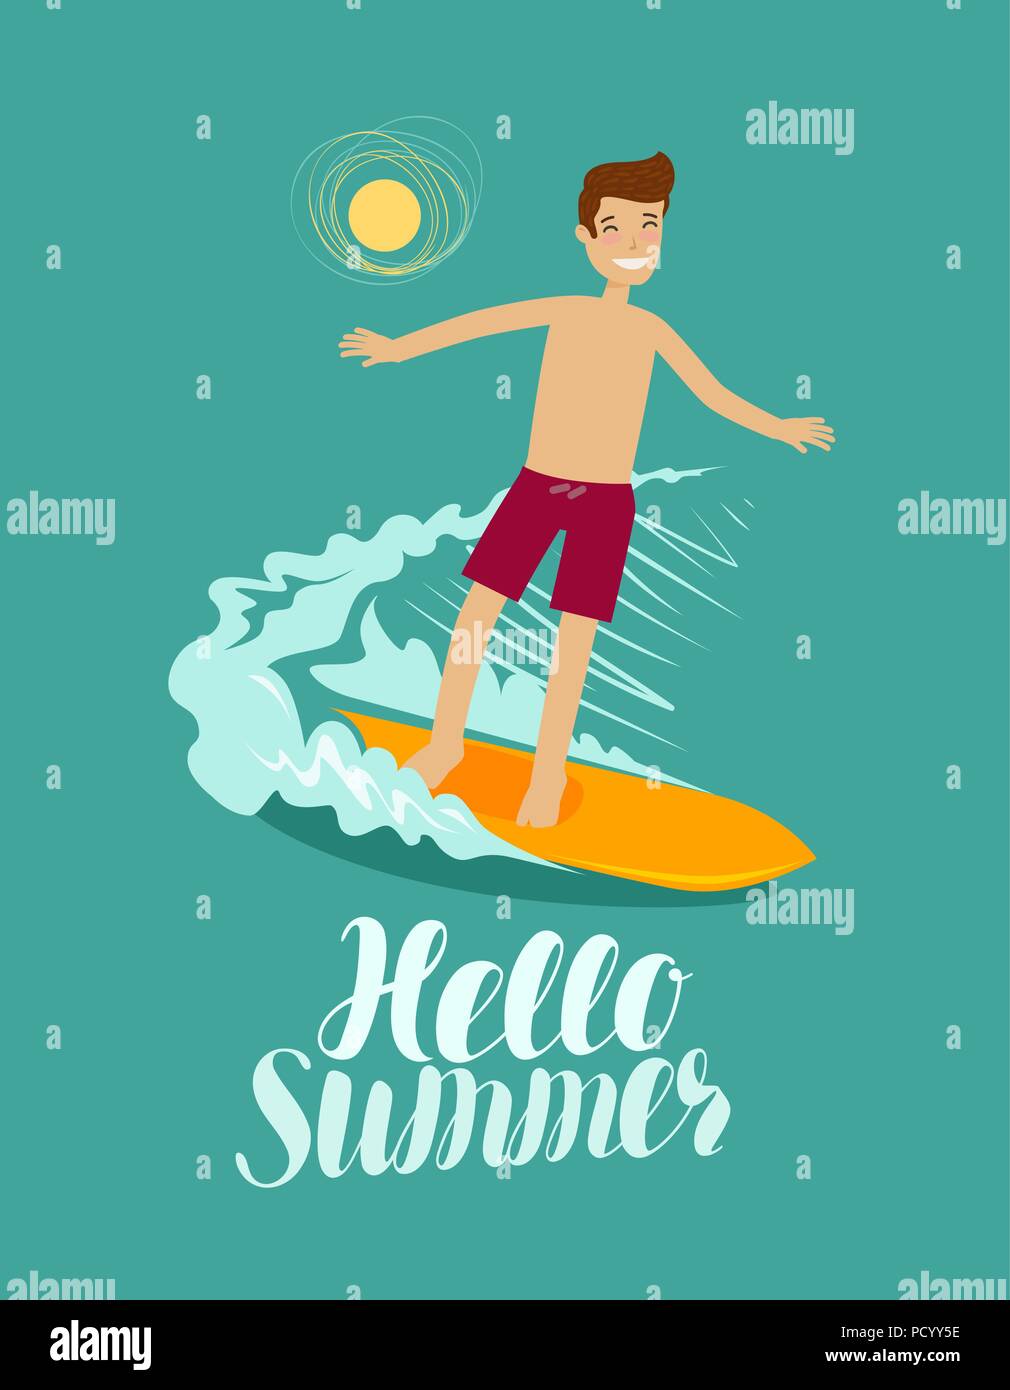 Ciao estate, banner. Surfer e wave. Surf illustrazione vettoriale Illustrazione Vettoriale